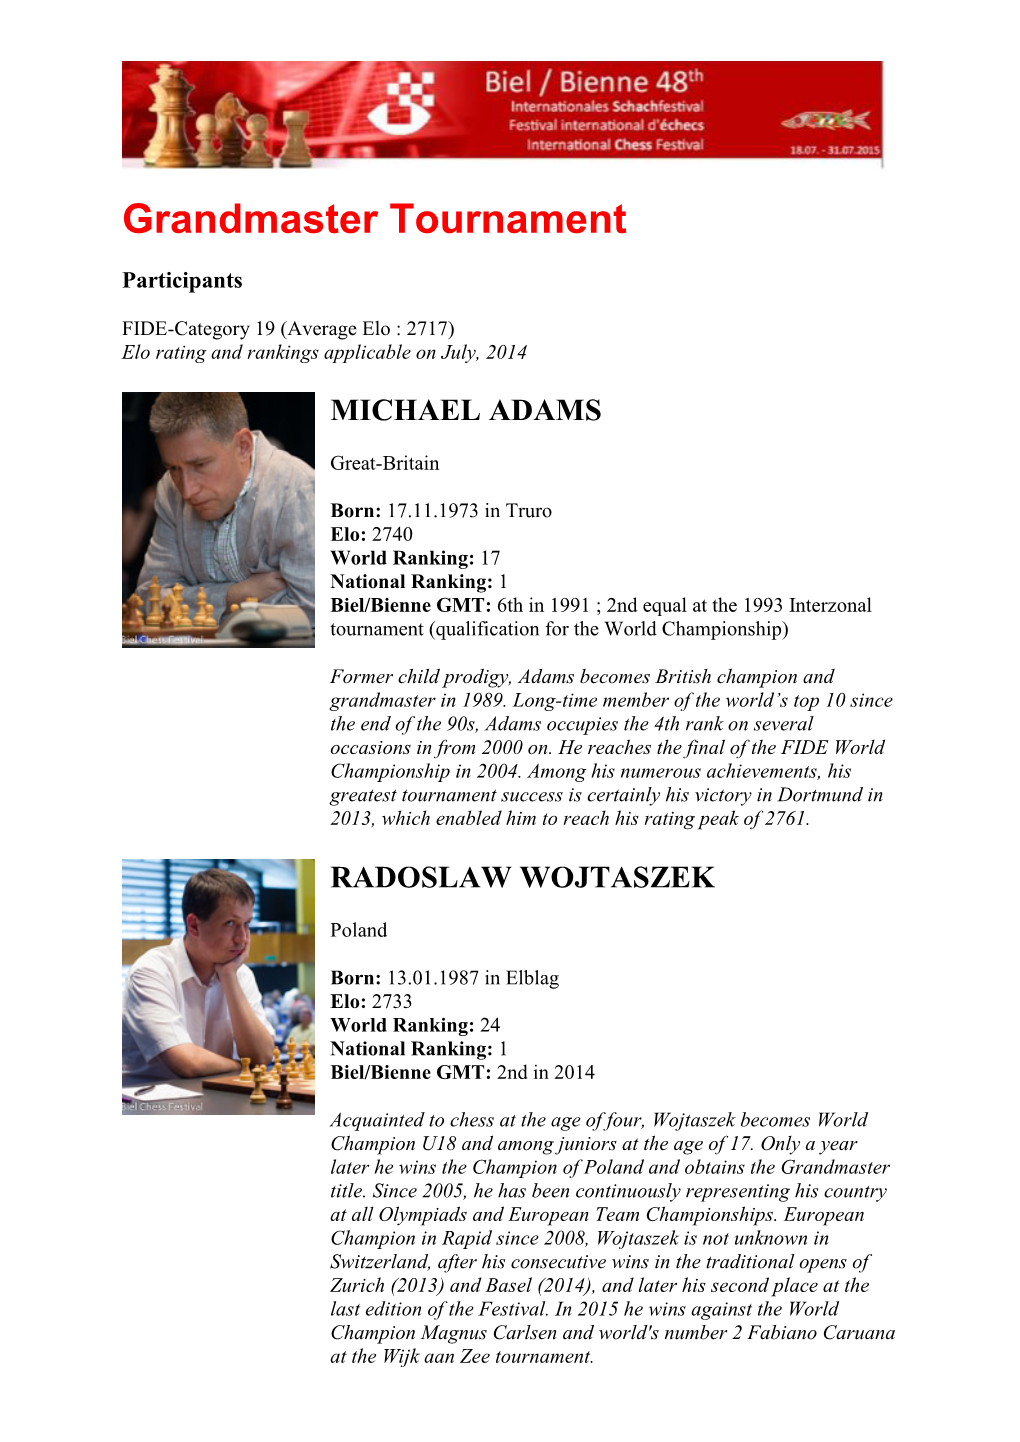 Grandmaster Tournament Participants